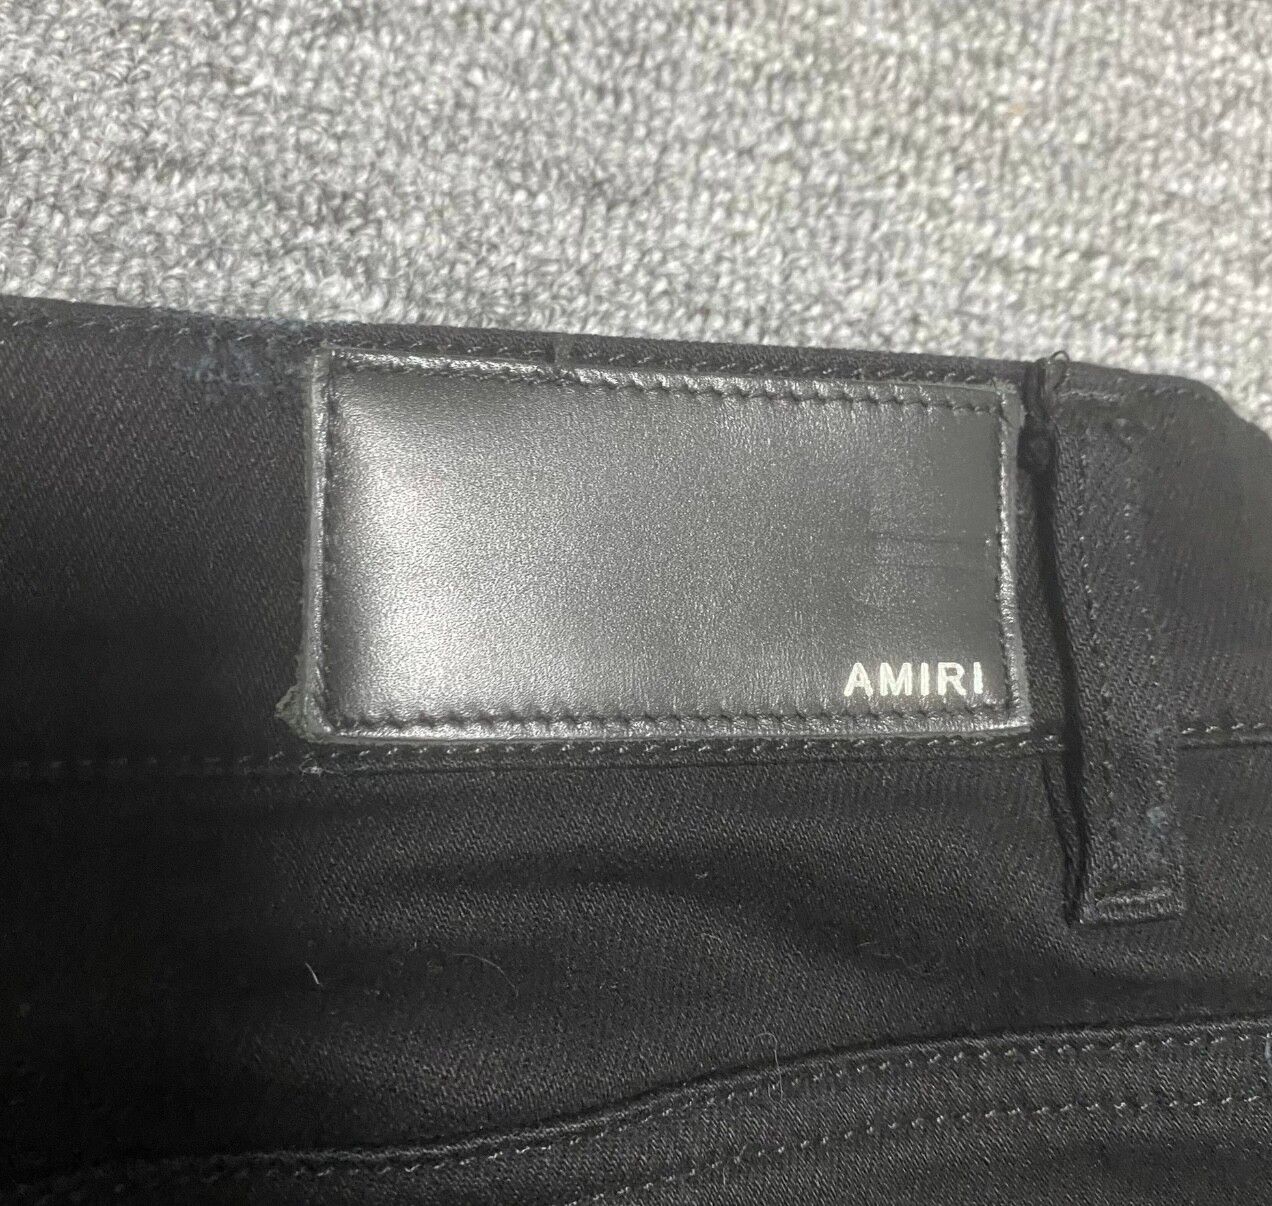 Amiri zebra distressed jeans - 6